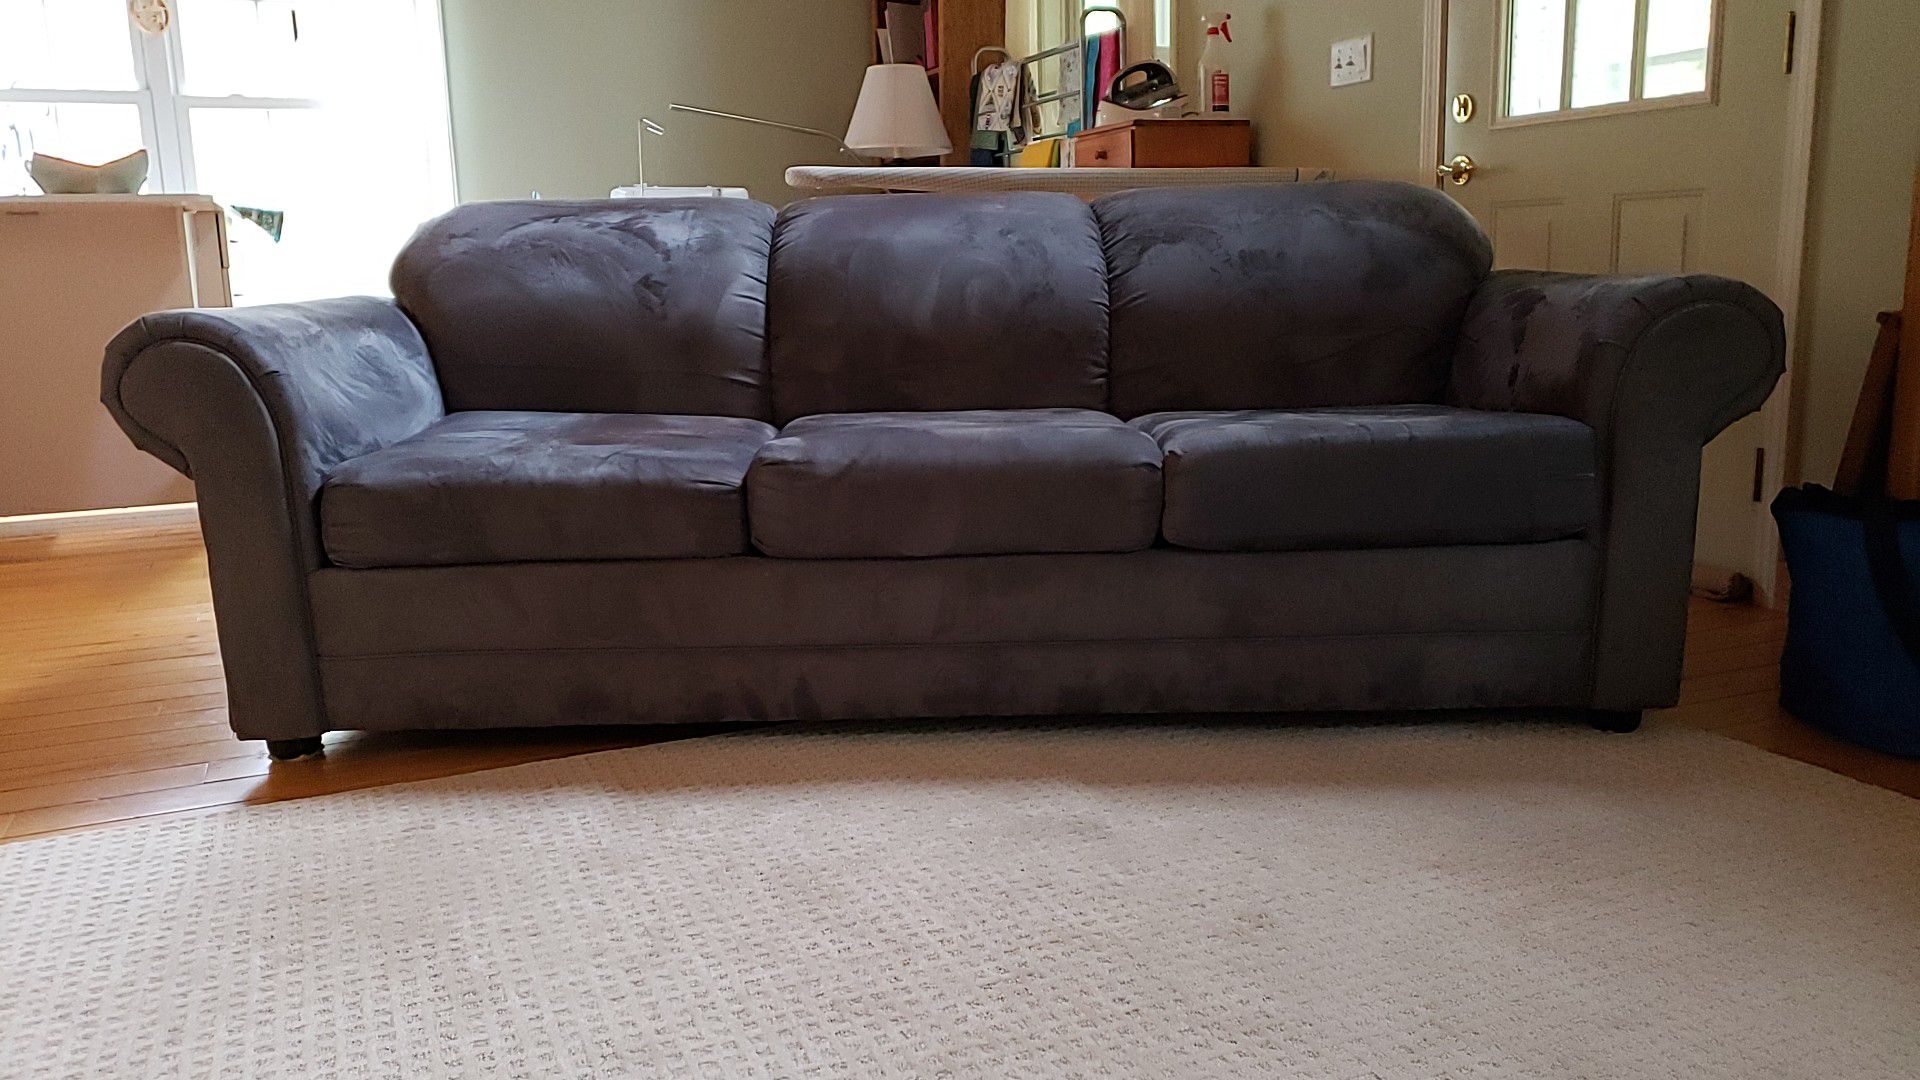 Gray, queen size hide-a-bed sofa